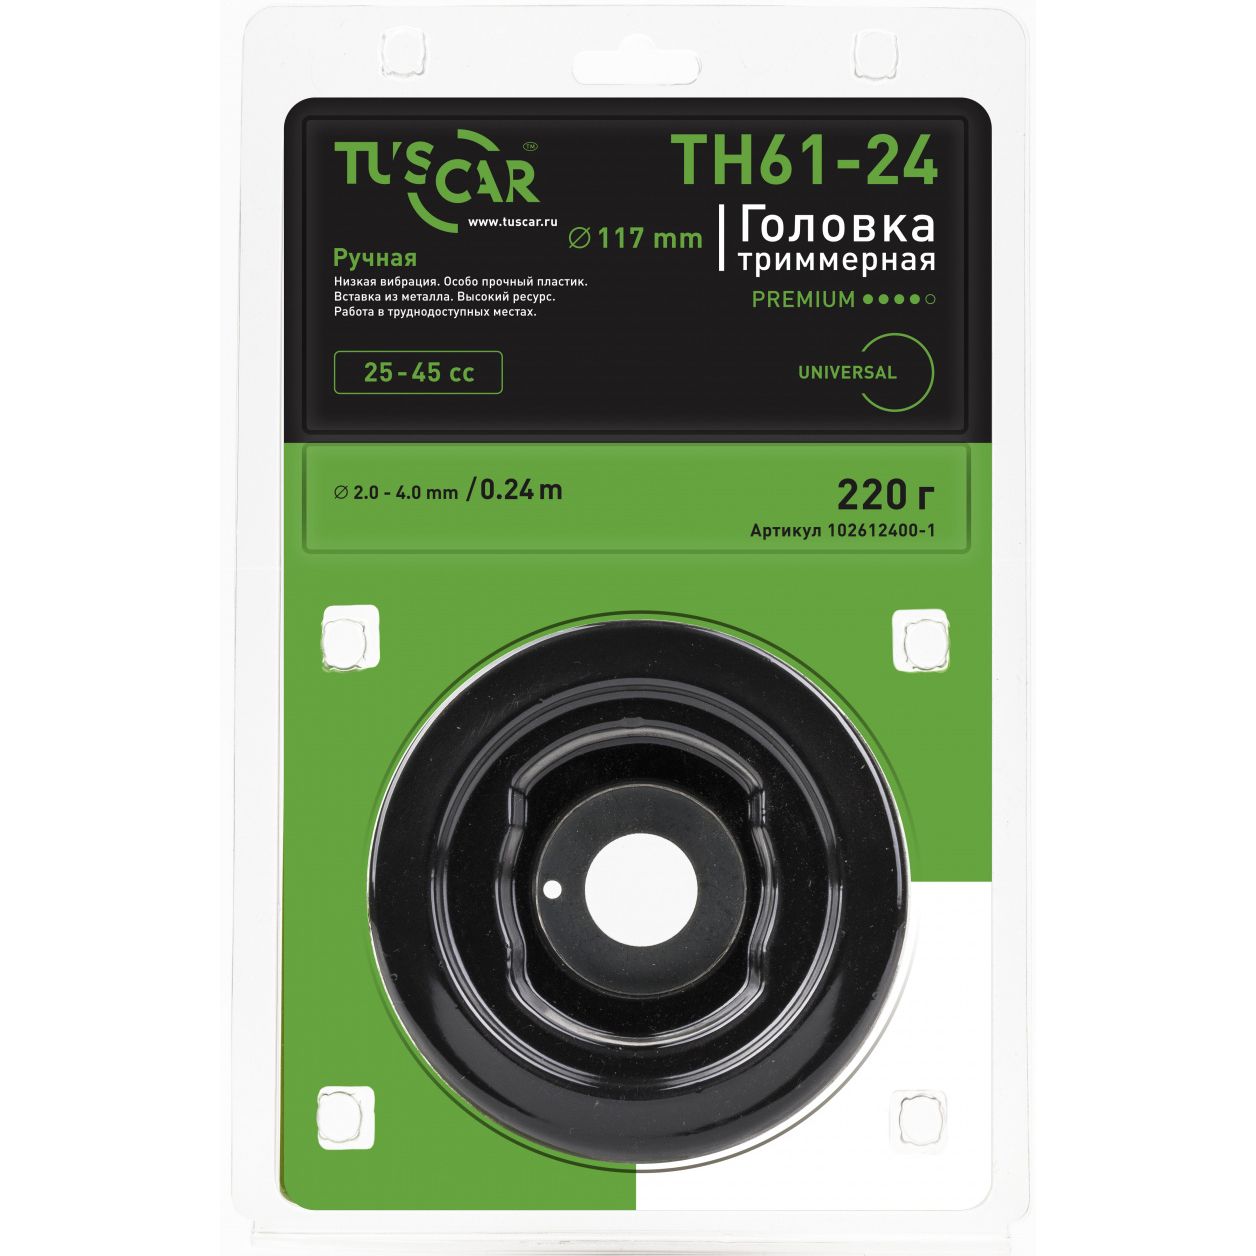 Головка триммерная Tuscar TH61-24 Premium universal 102612400-1 Tuscar от магазина Tehnorama